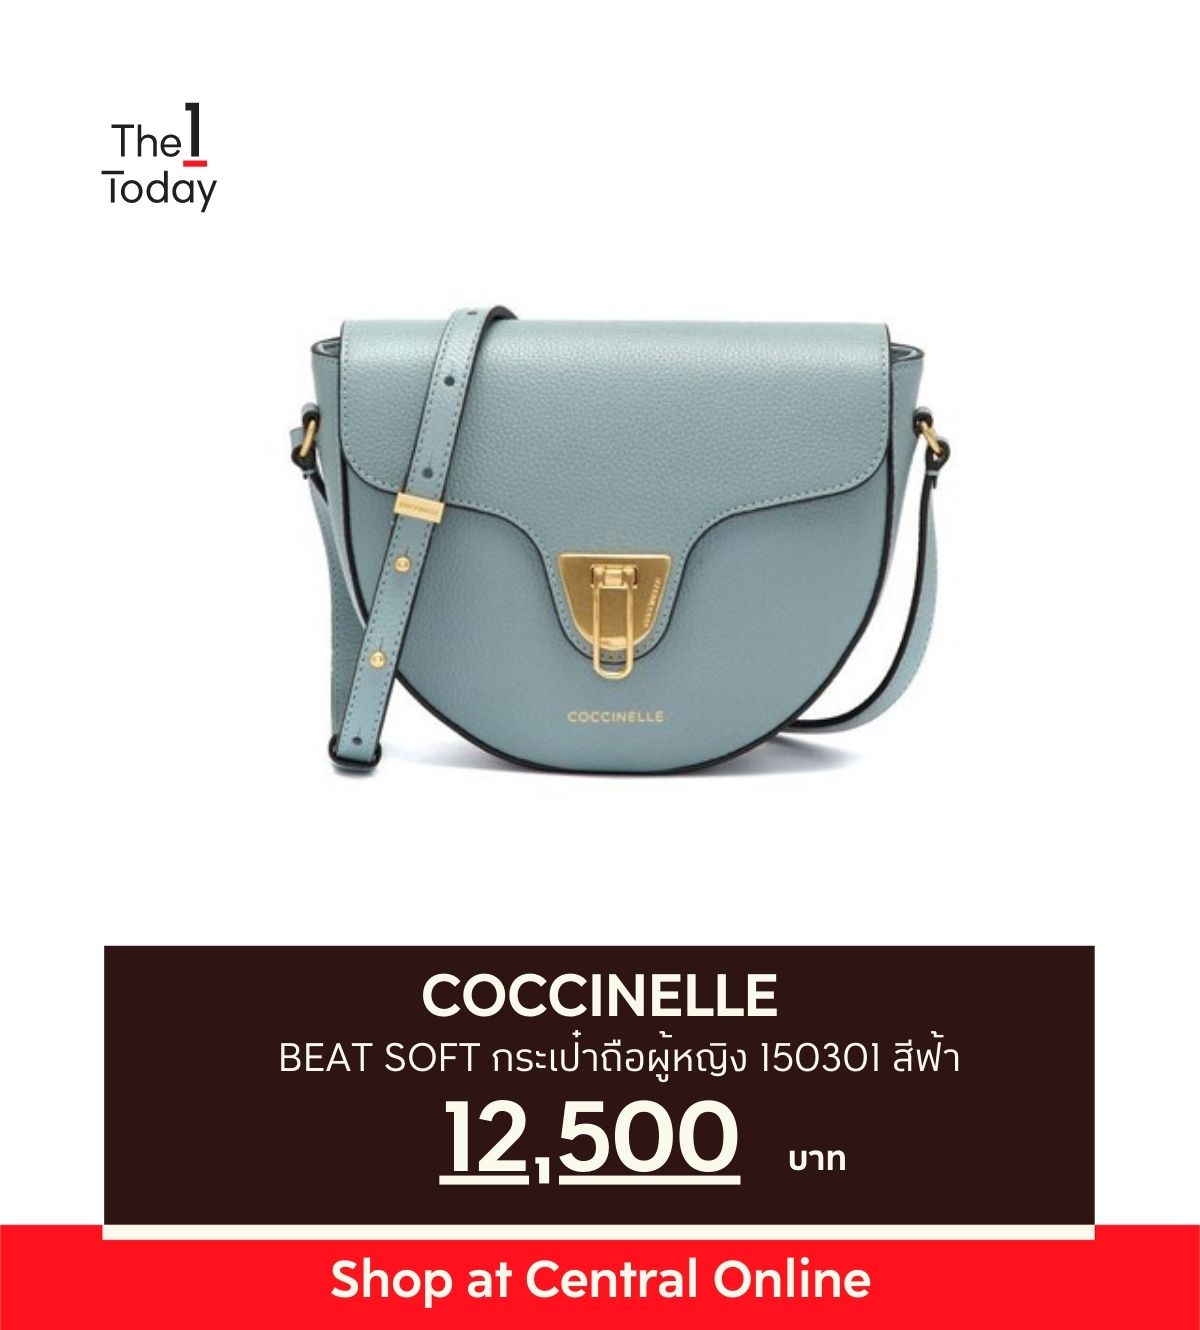 COCCINELLE BEAT SOFT กระเป๋าถือผู้หญิง 150301 สีฟ้า ลด 40% จากราคาปกติ 12,500 บาท เหลือ 7,500 บาท